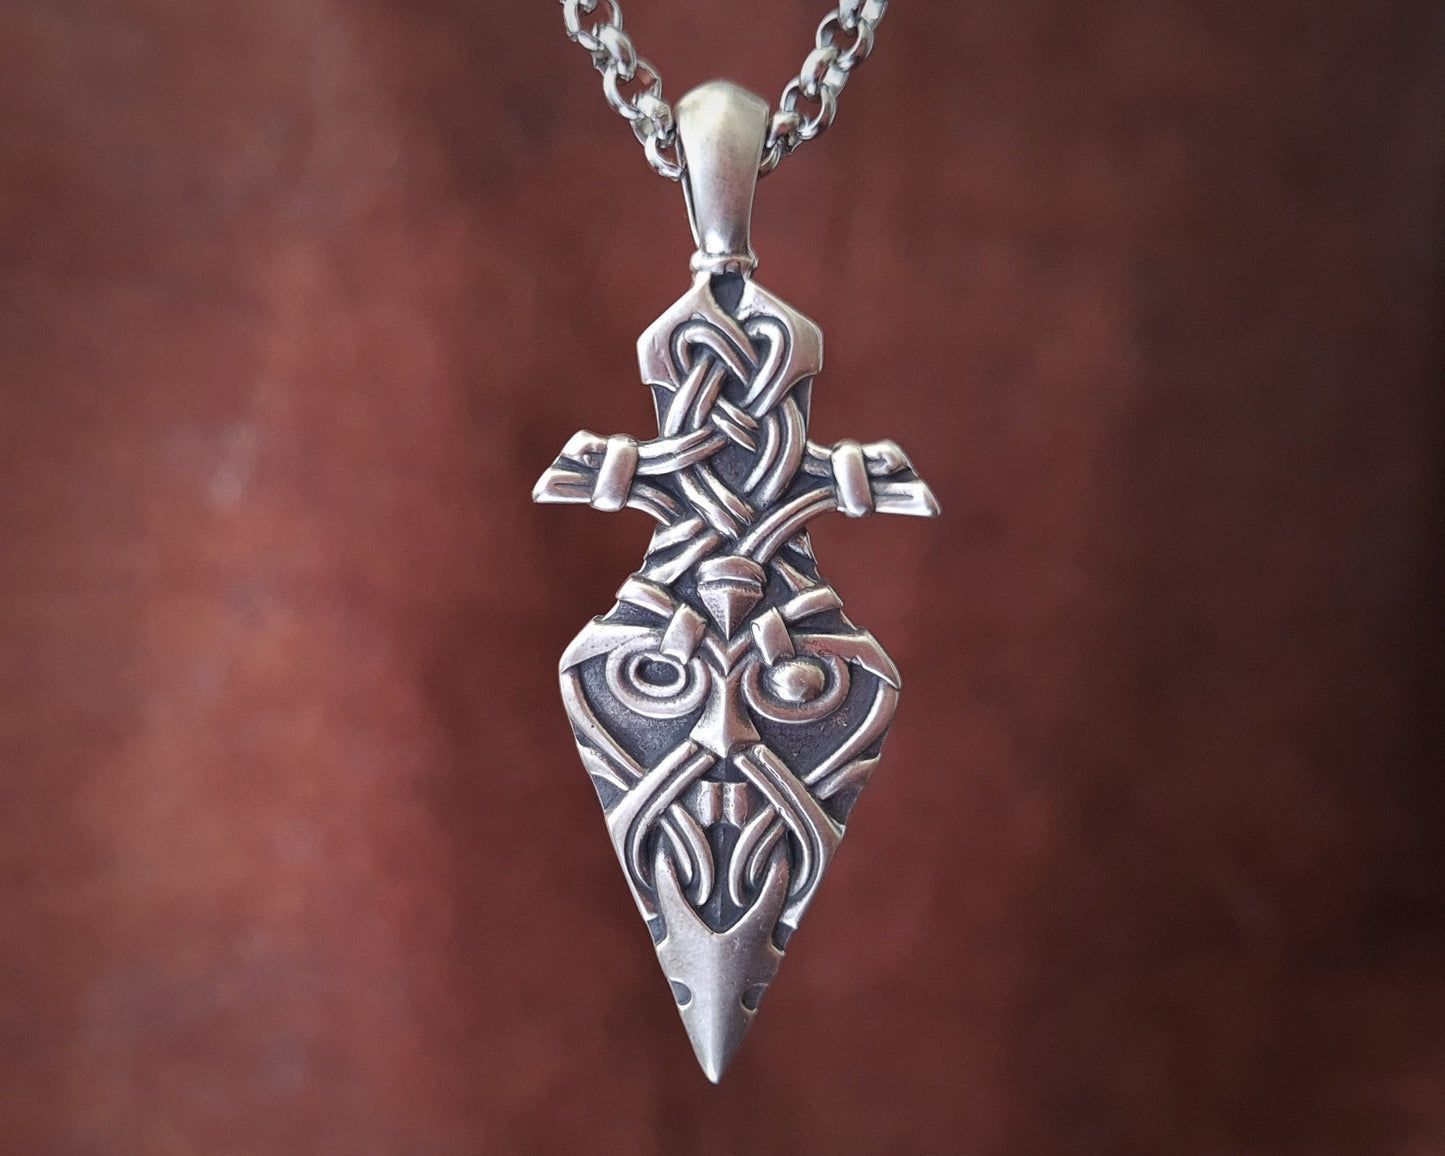 Brass / 925 Sterling Silver Viking Odin Gungnir Spear Pendant Necklace Charm Talisman Jewelry - Baldur Jewelry